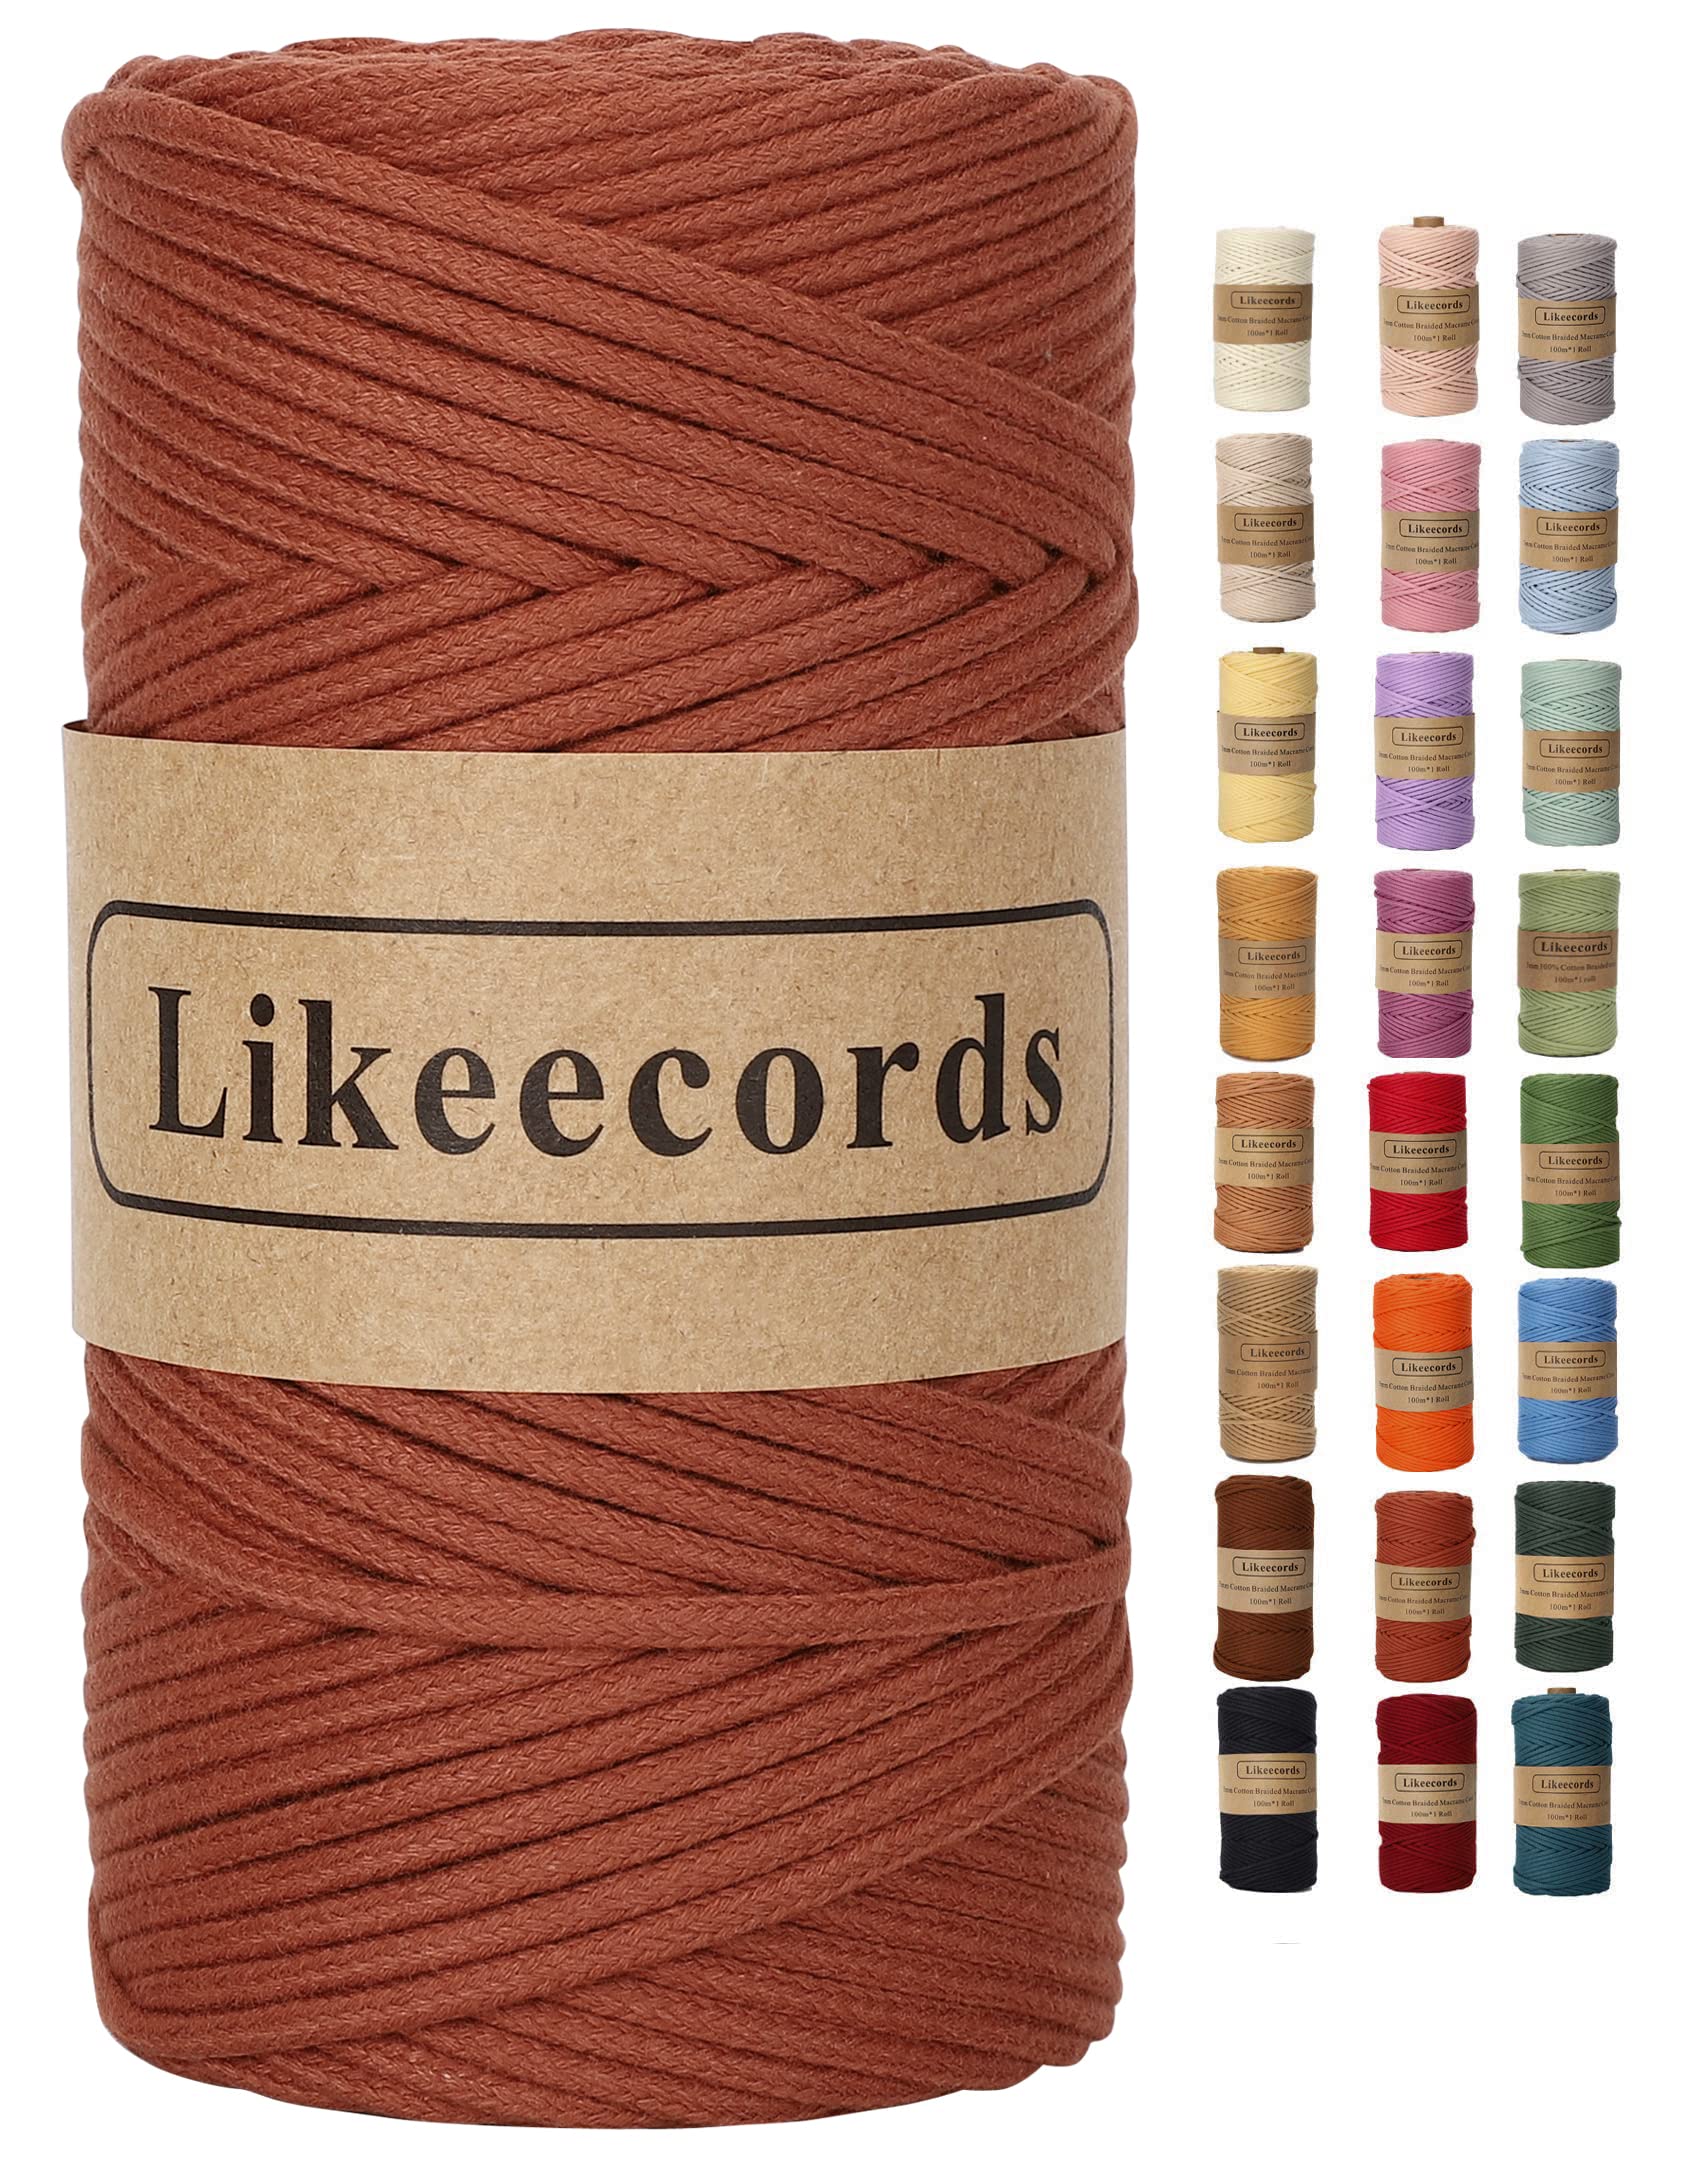 Likeecords Braided Macrame Cotton Cord 3mm x 100m,Macrame Rope